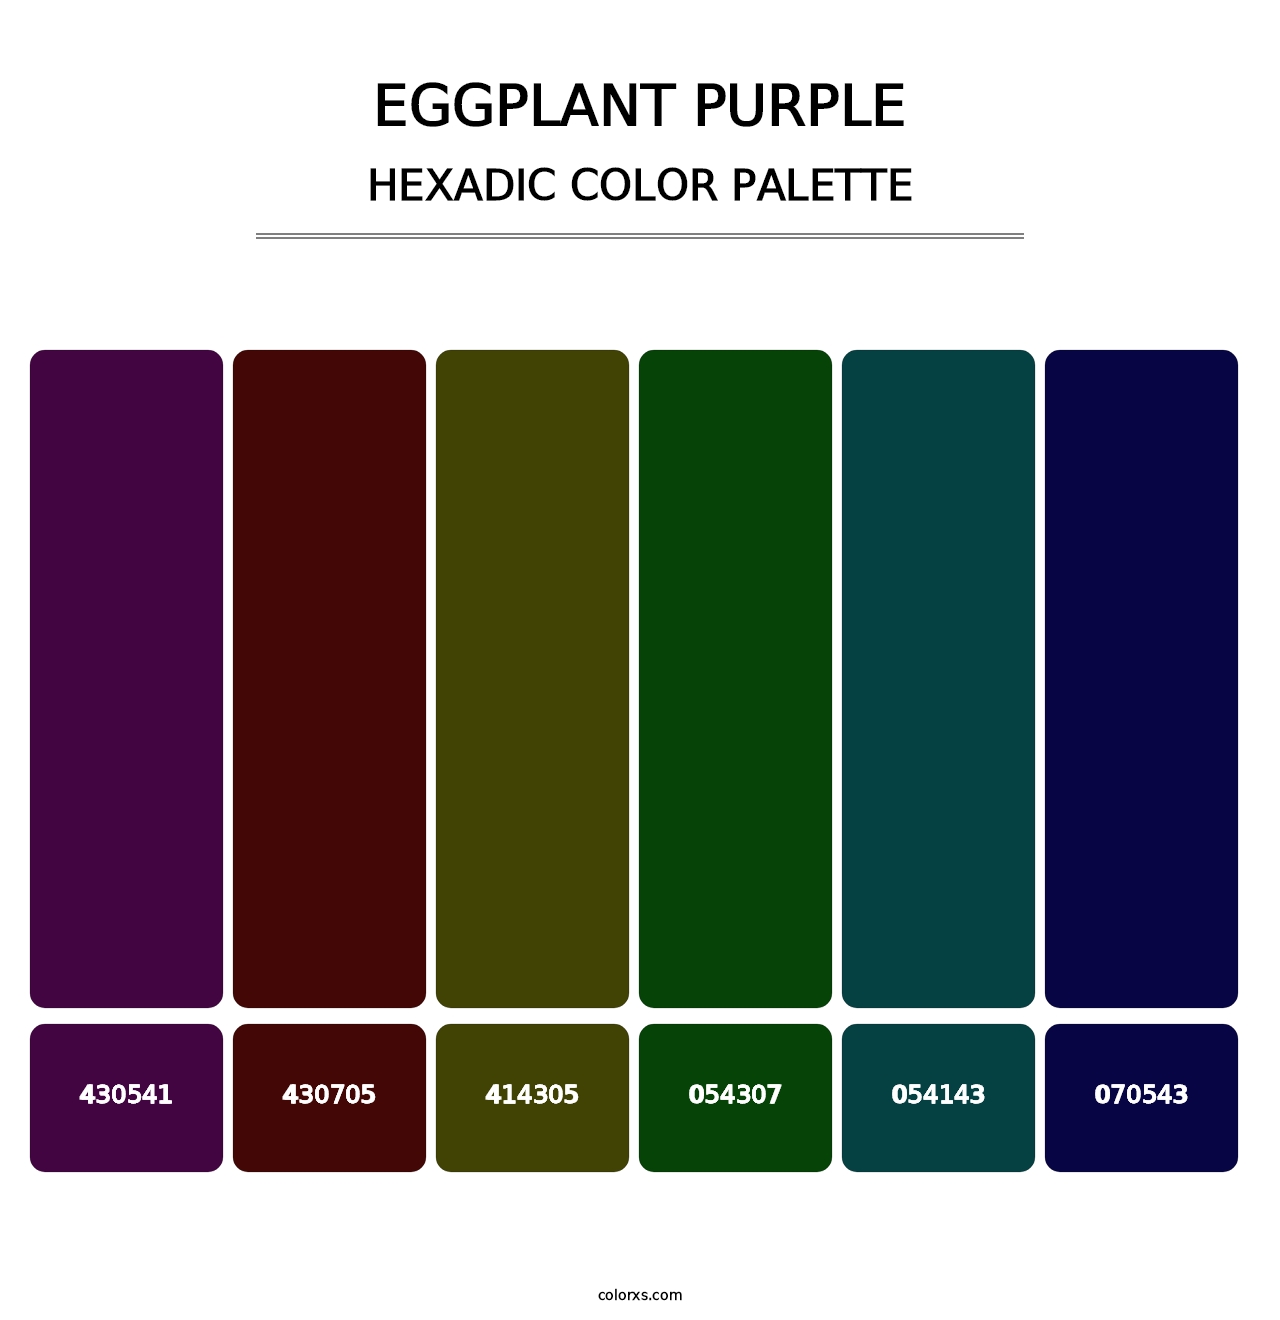 Eggplant Purple - Hexadic Color Palette